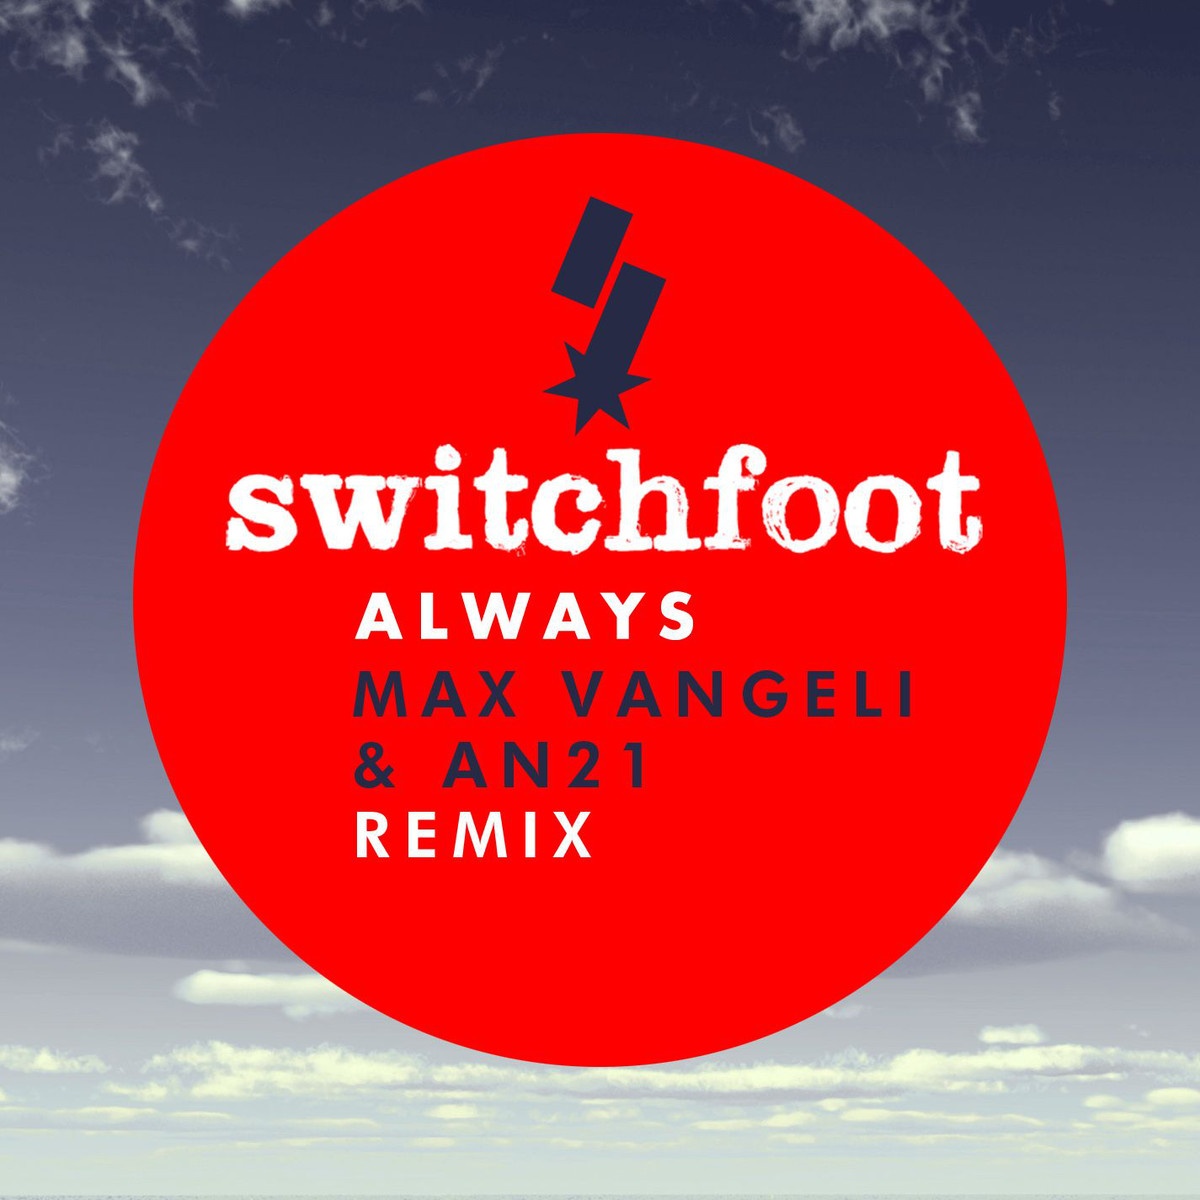 Always (Max Vangeli & AN21 Remix)